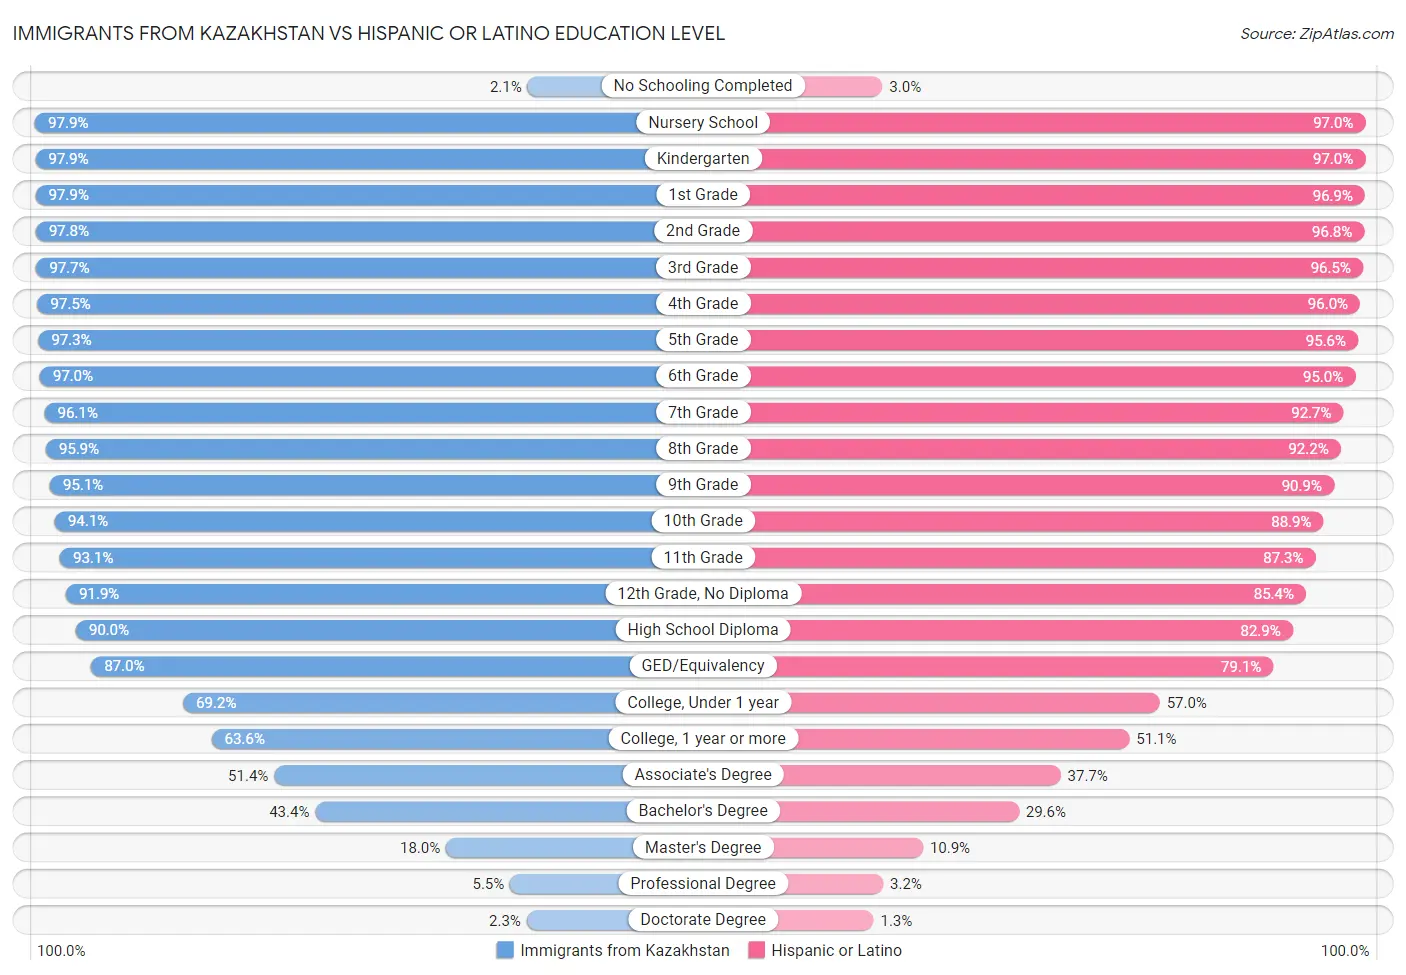 Immigrants from Kazakhstan vs Hispanic or Latino Education Level